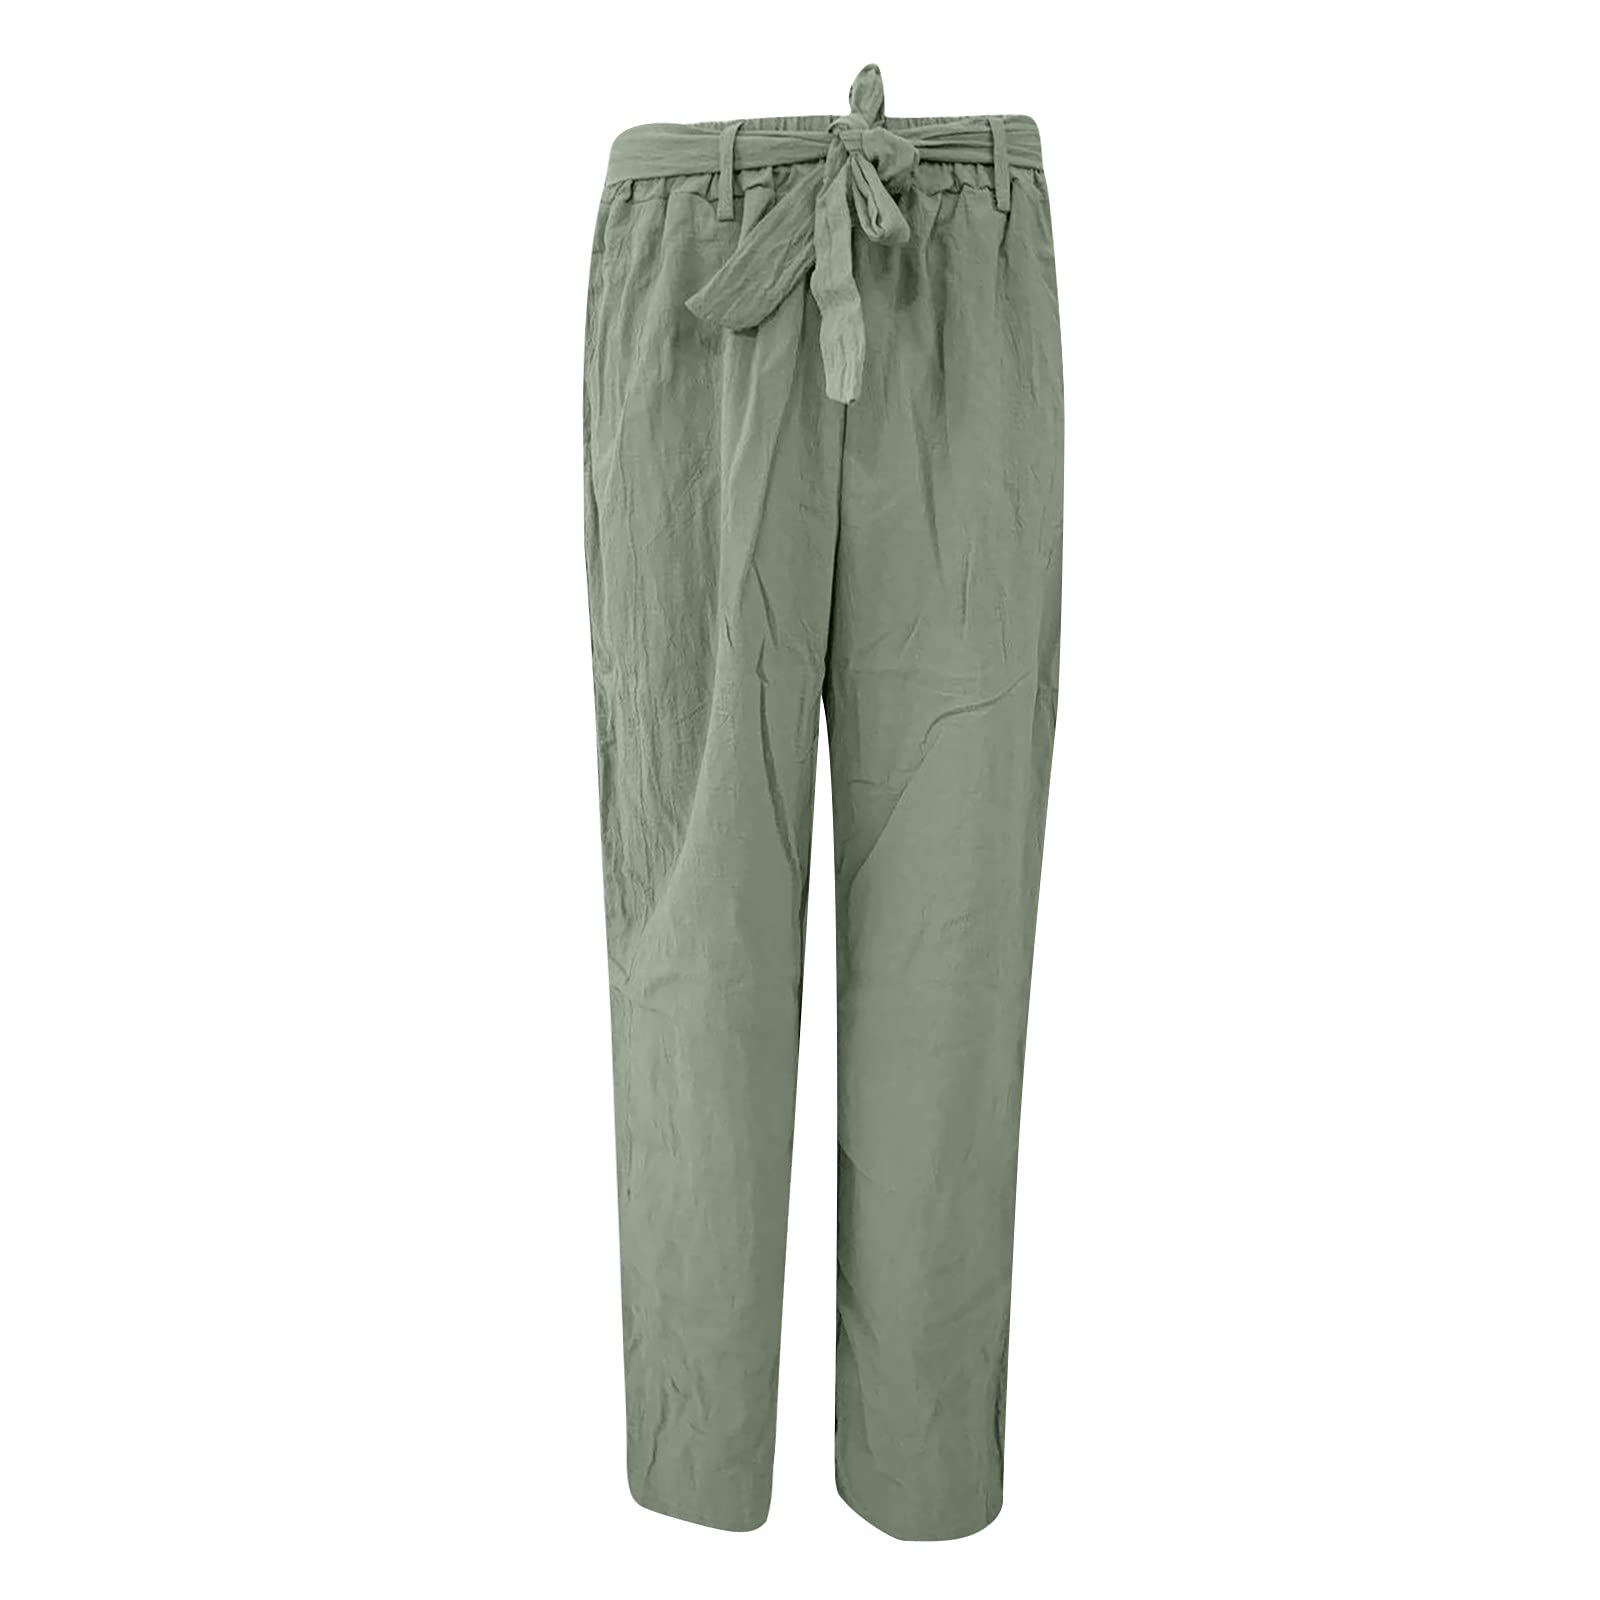 Bravetoshop Women's Cotton Linen Pants Wide Leg Palazzo Lounge Pants with Pockets High Rise Casual Loose Trousers Pants (Green,XXXXL)